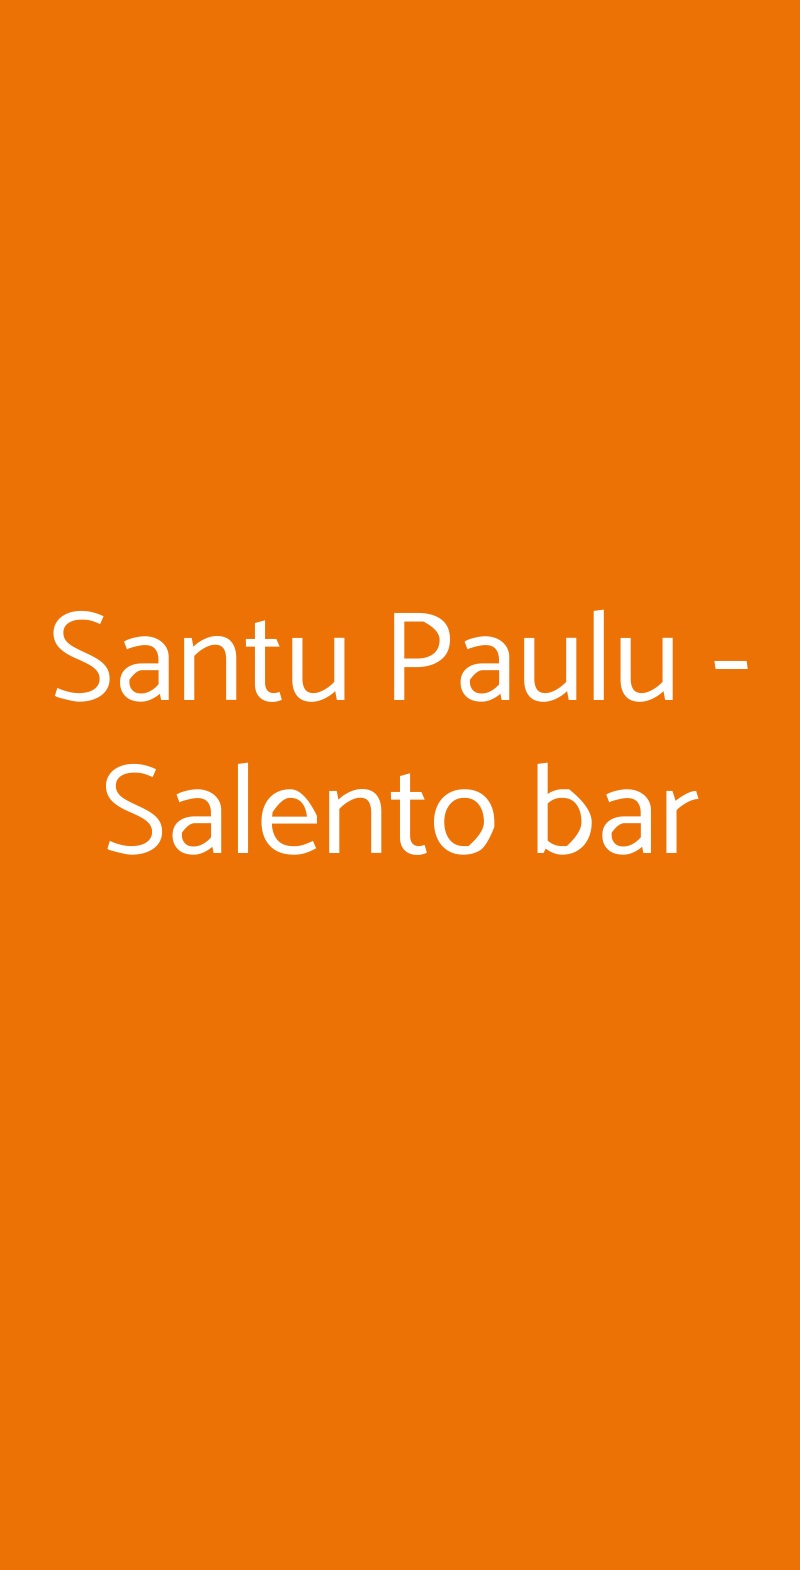 Santu Paulu - Salento bar Milano menù 1 pagina